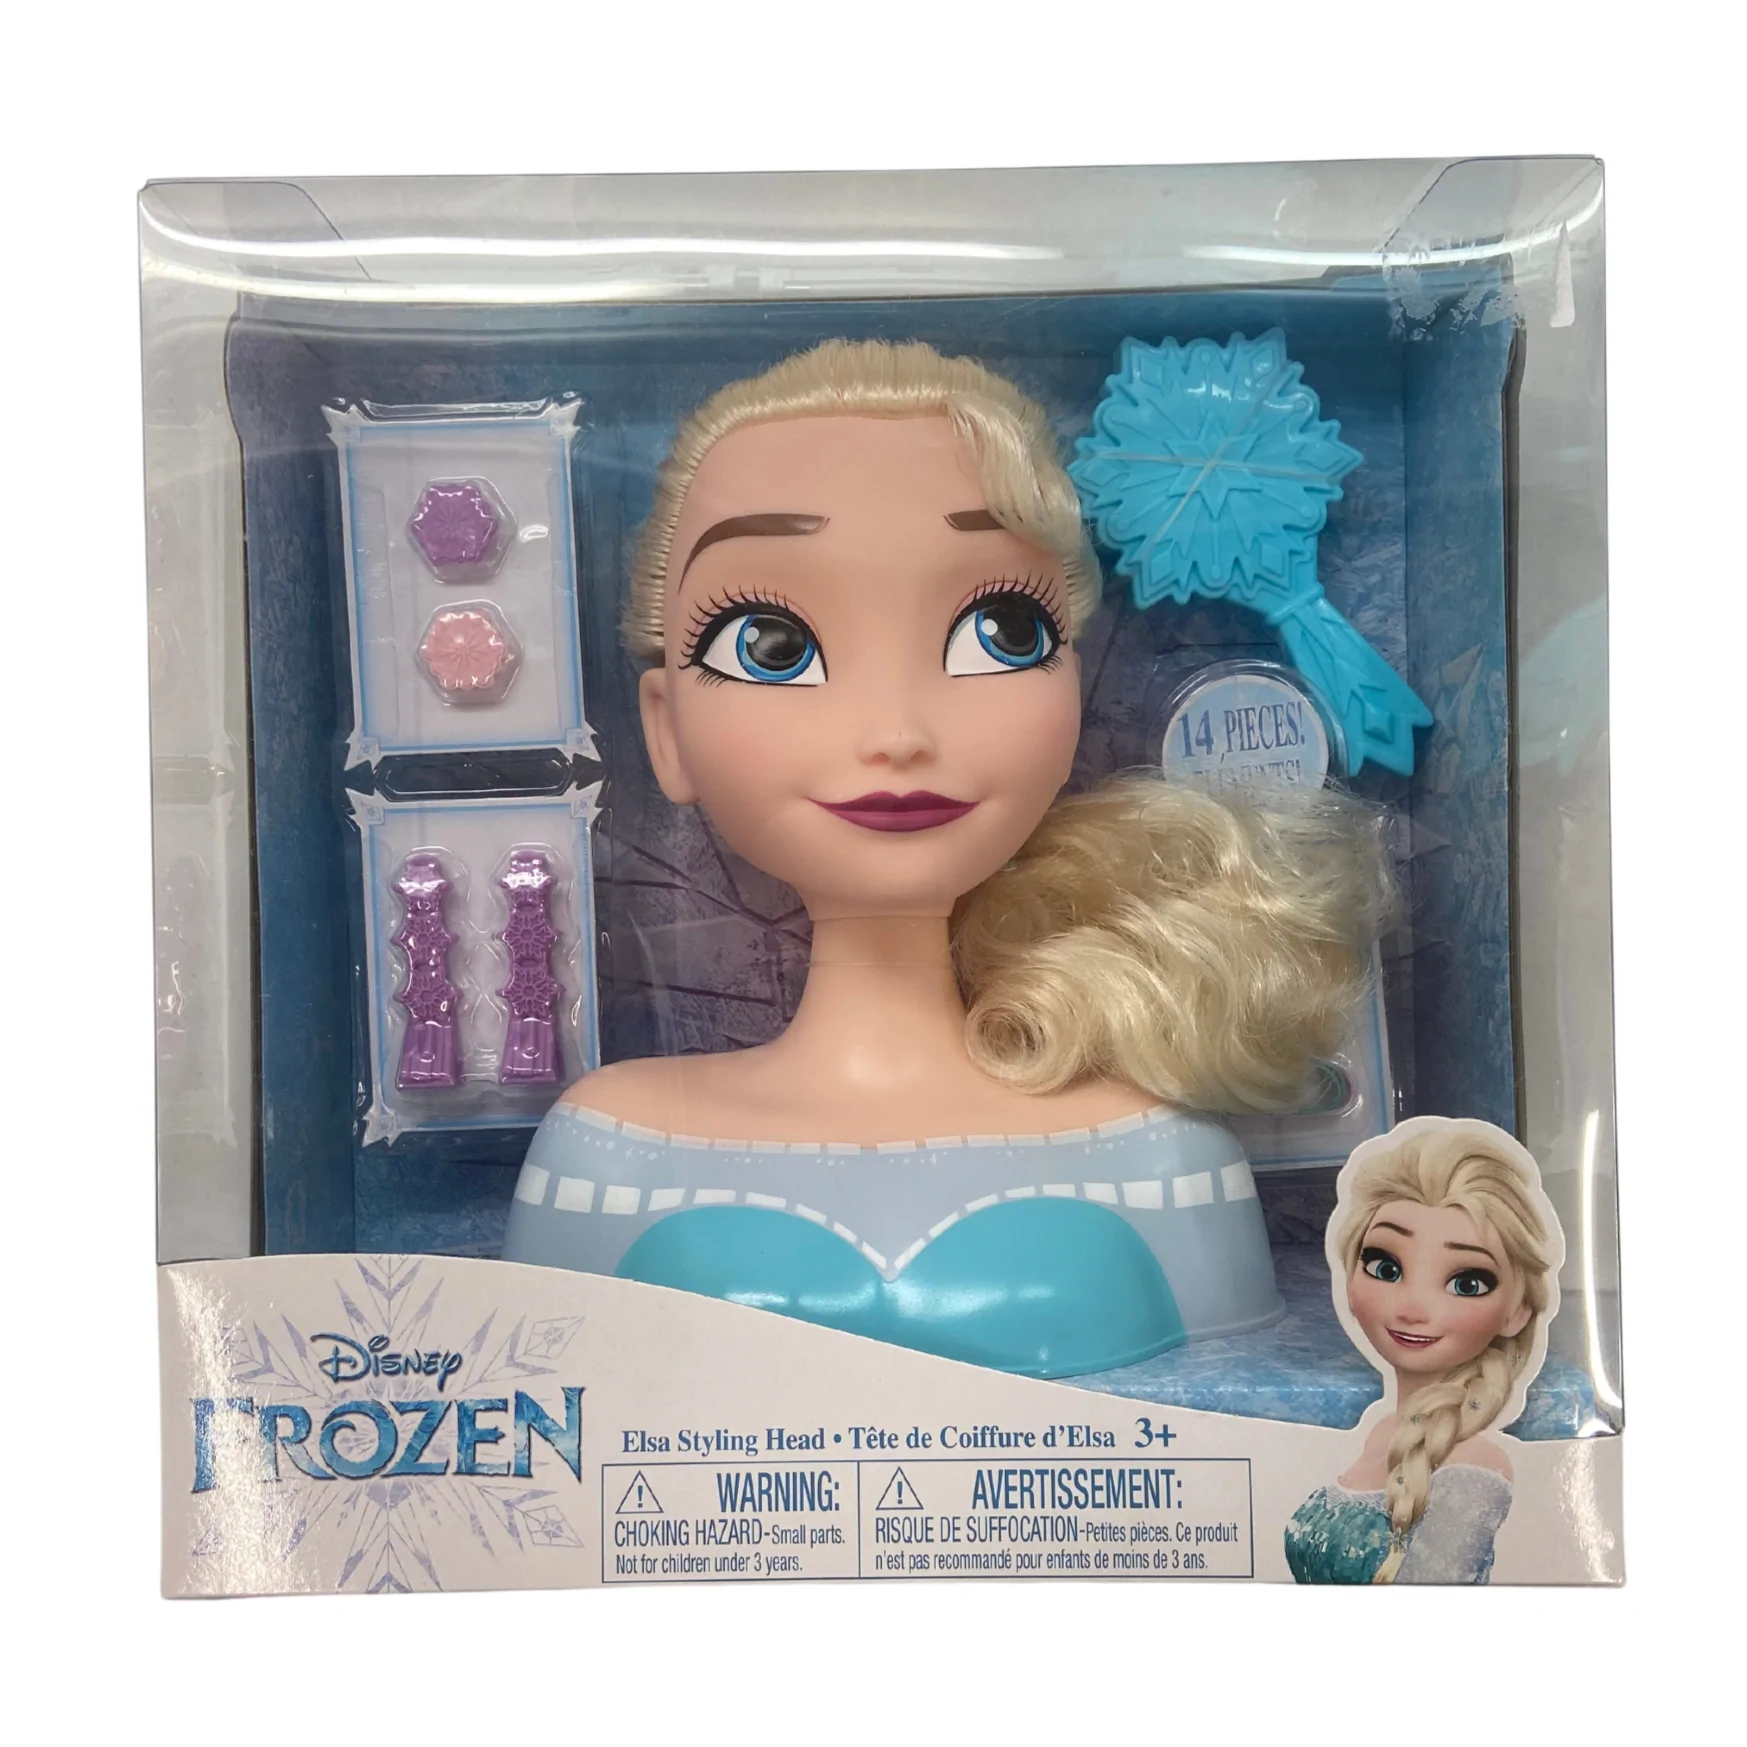 Disney Frozen: Elsa Styling Head / 14 Pieces Included / Doll Head / Frozen / Queen Elsa